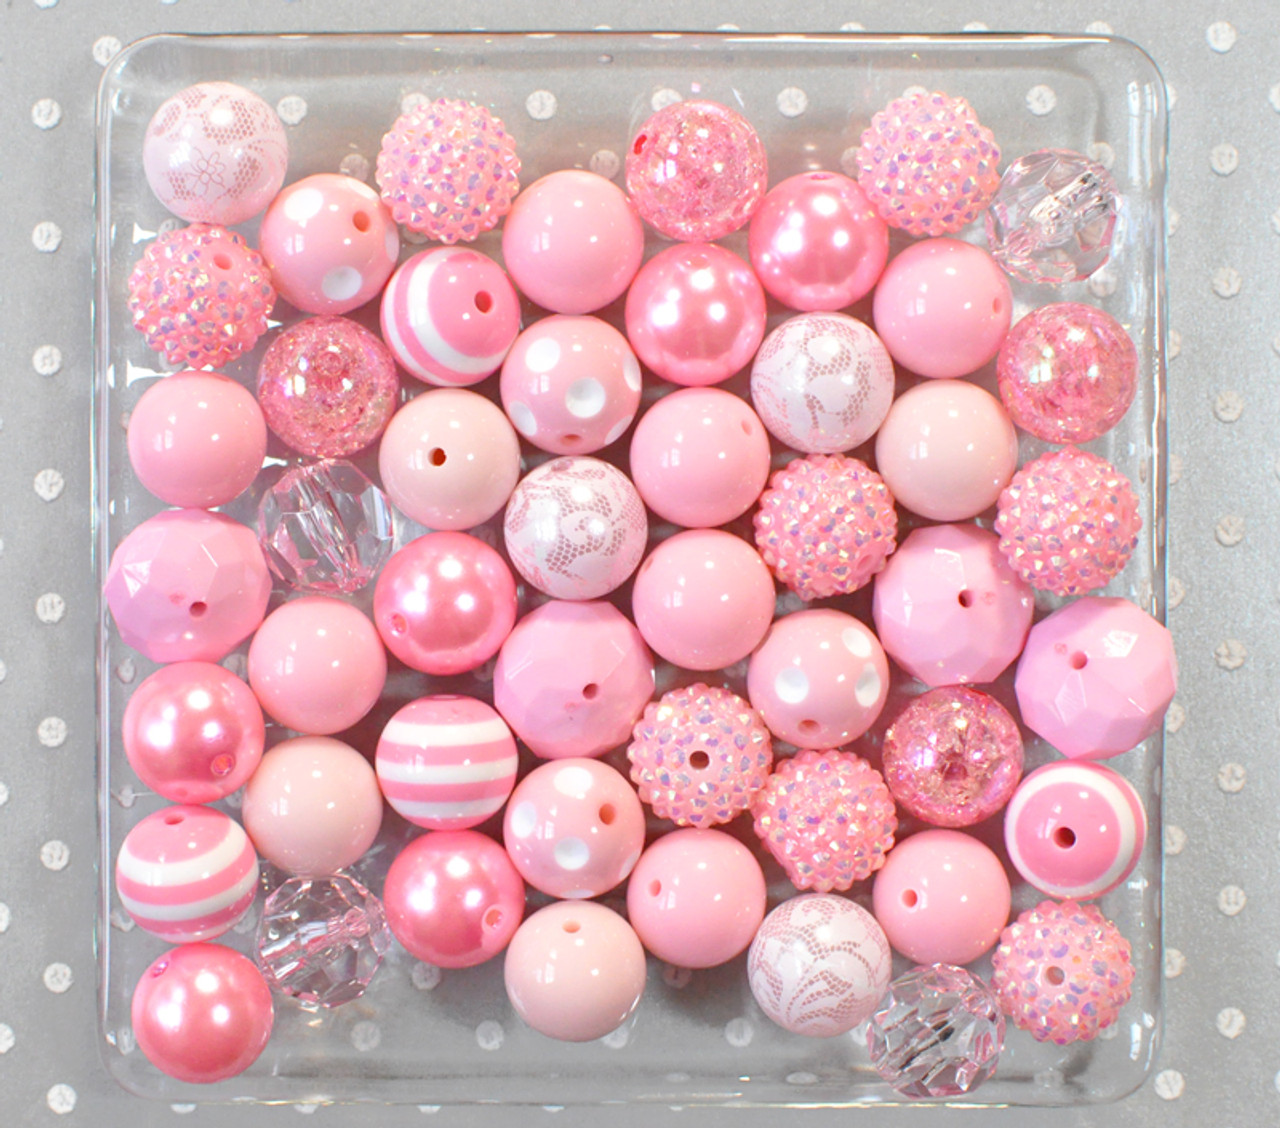 20mm beads, Red Beads Variety Pack, Bubblegum beads wholesale, Chunky  beads, Bubble gum beads, Beads in Bulk, Red bead mix